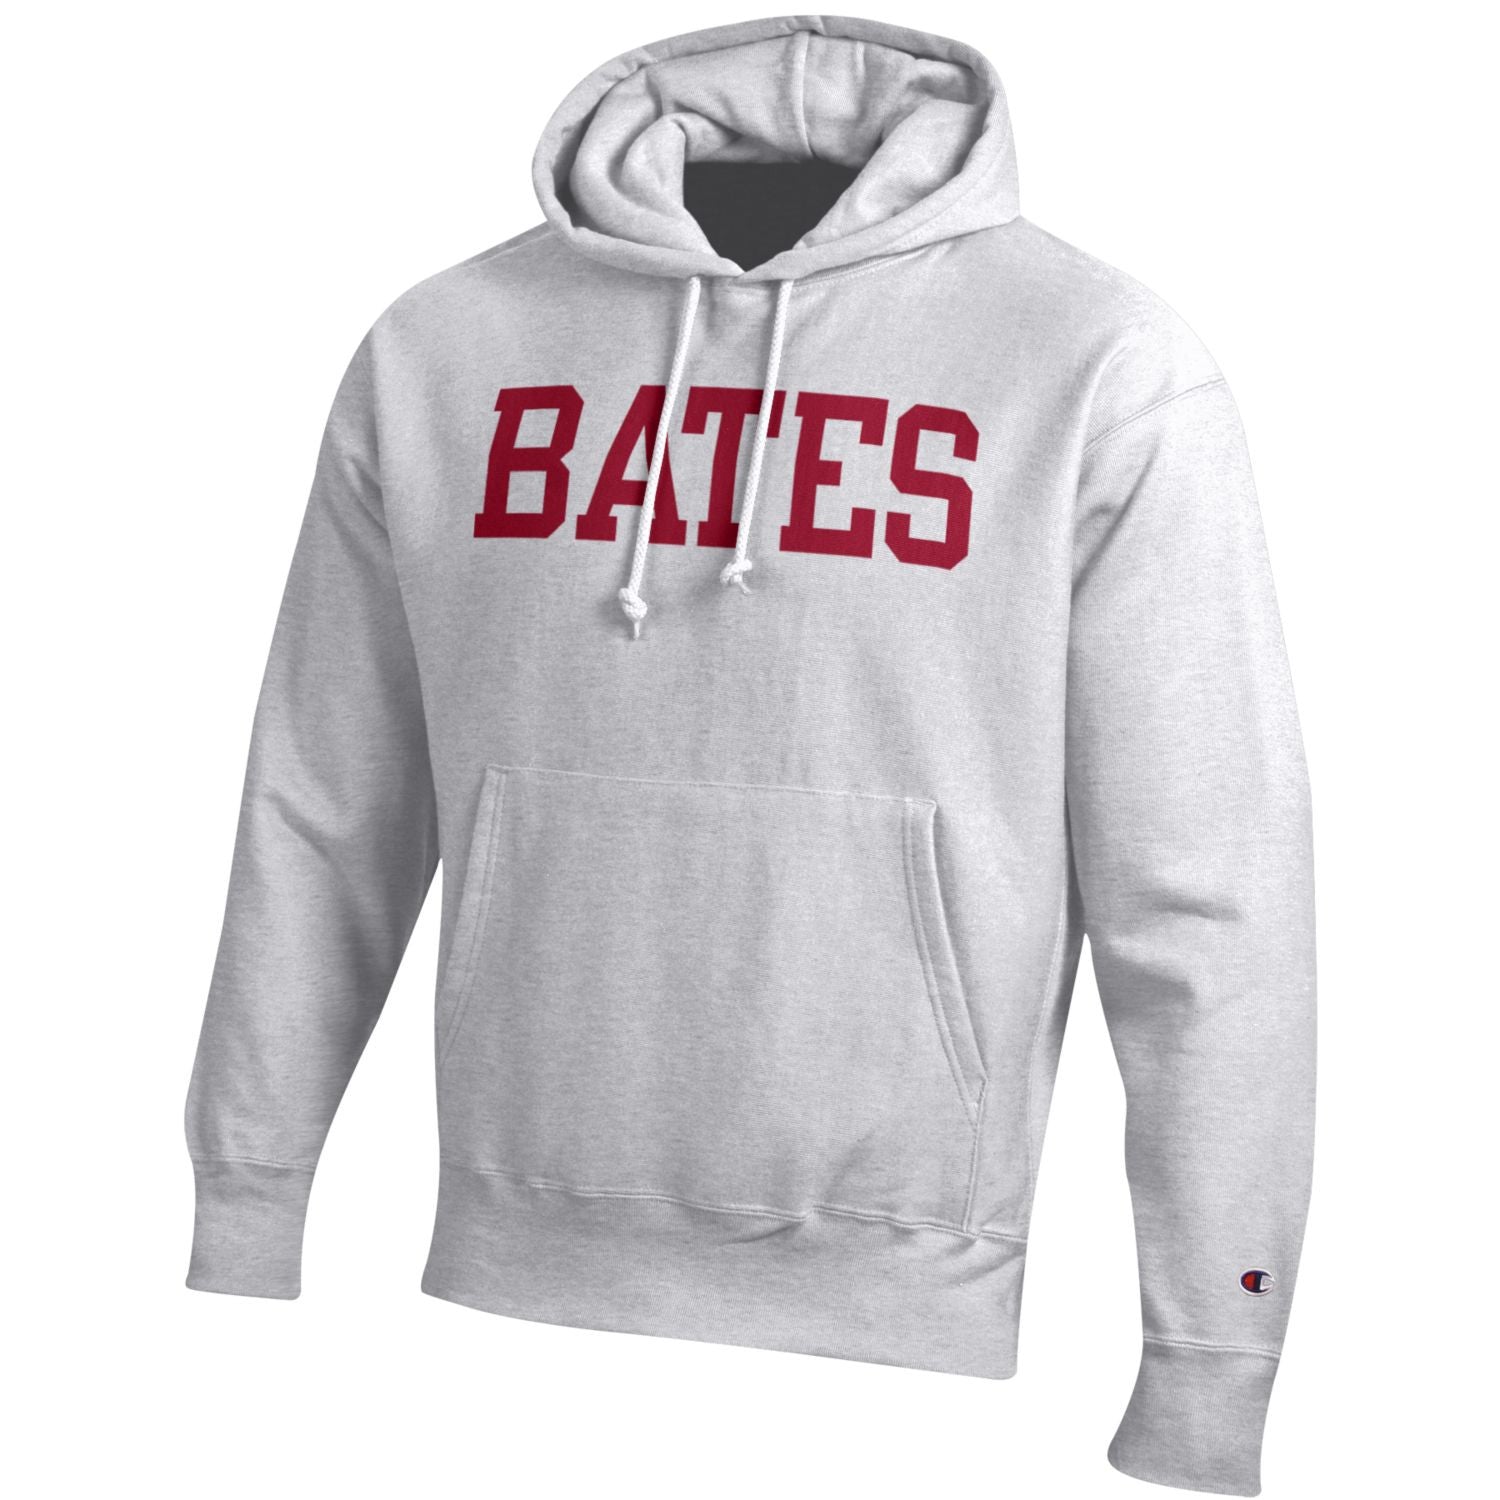 Champion Hooded Grey Sweatshirt with BATES Imprint | Bates College Store